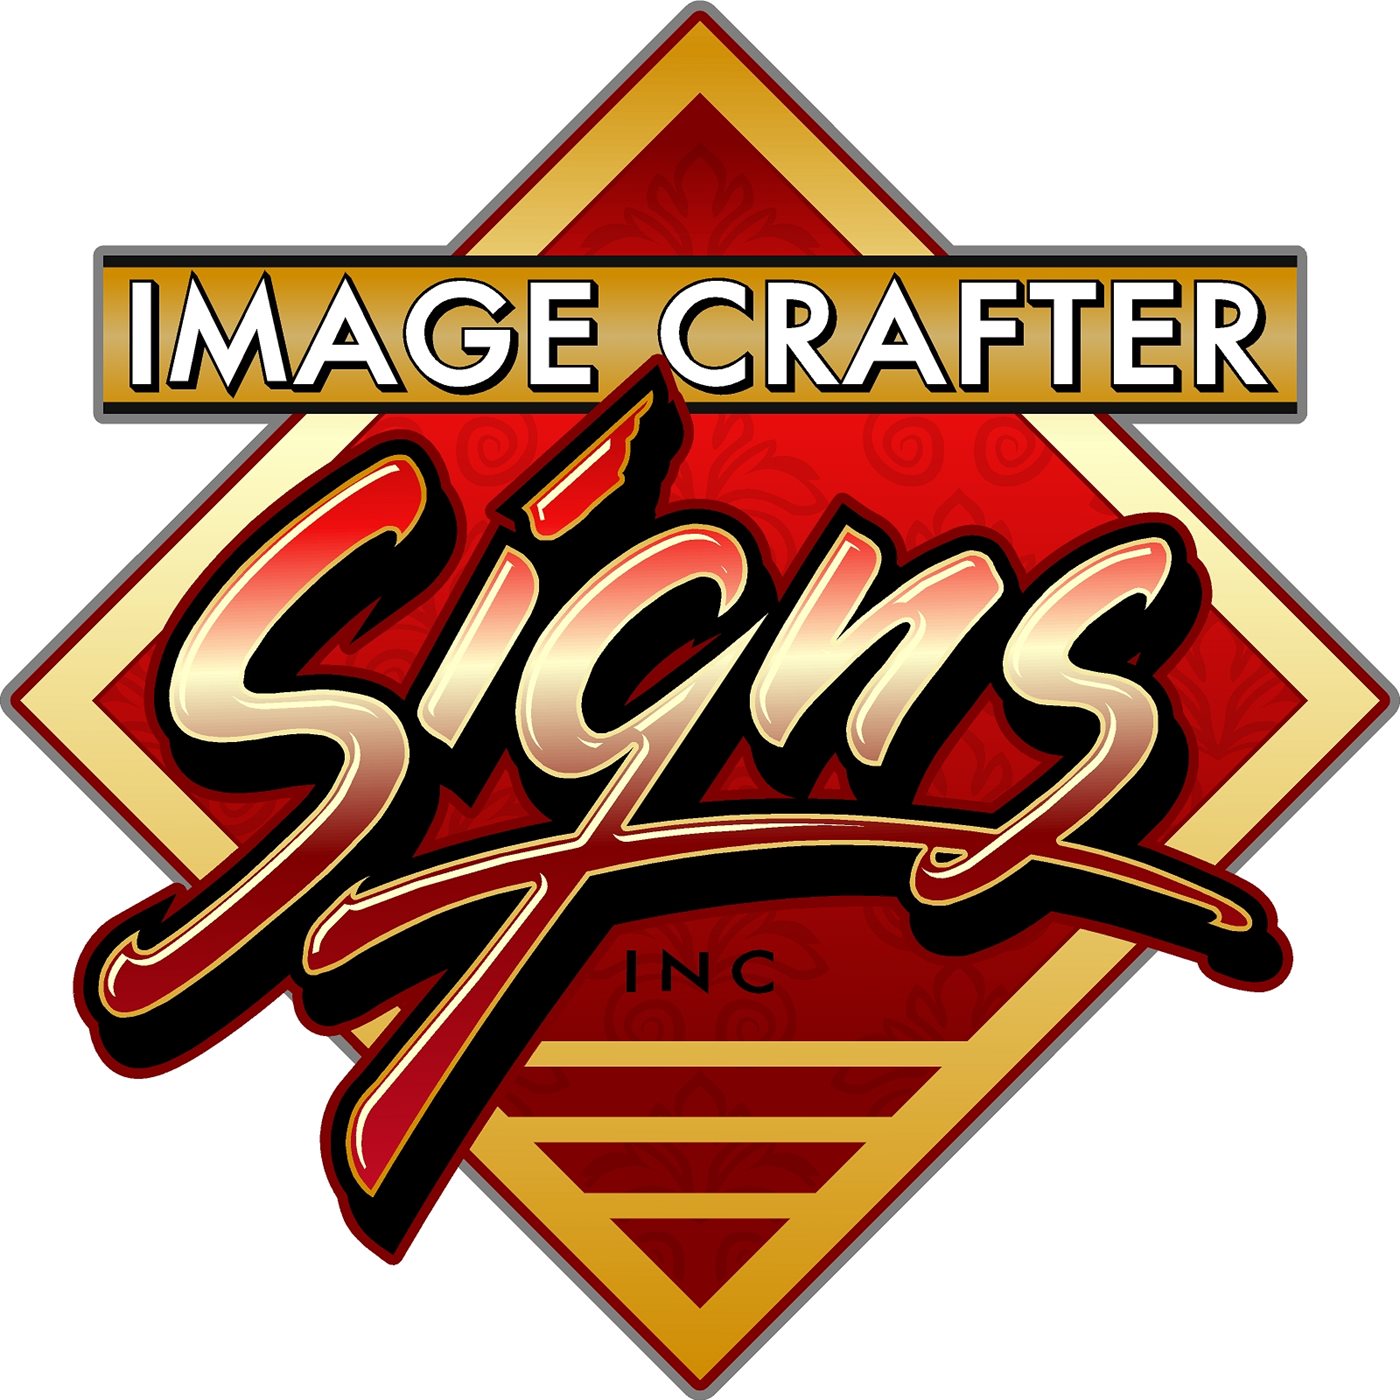 Image Crafter logo